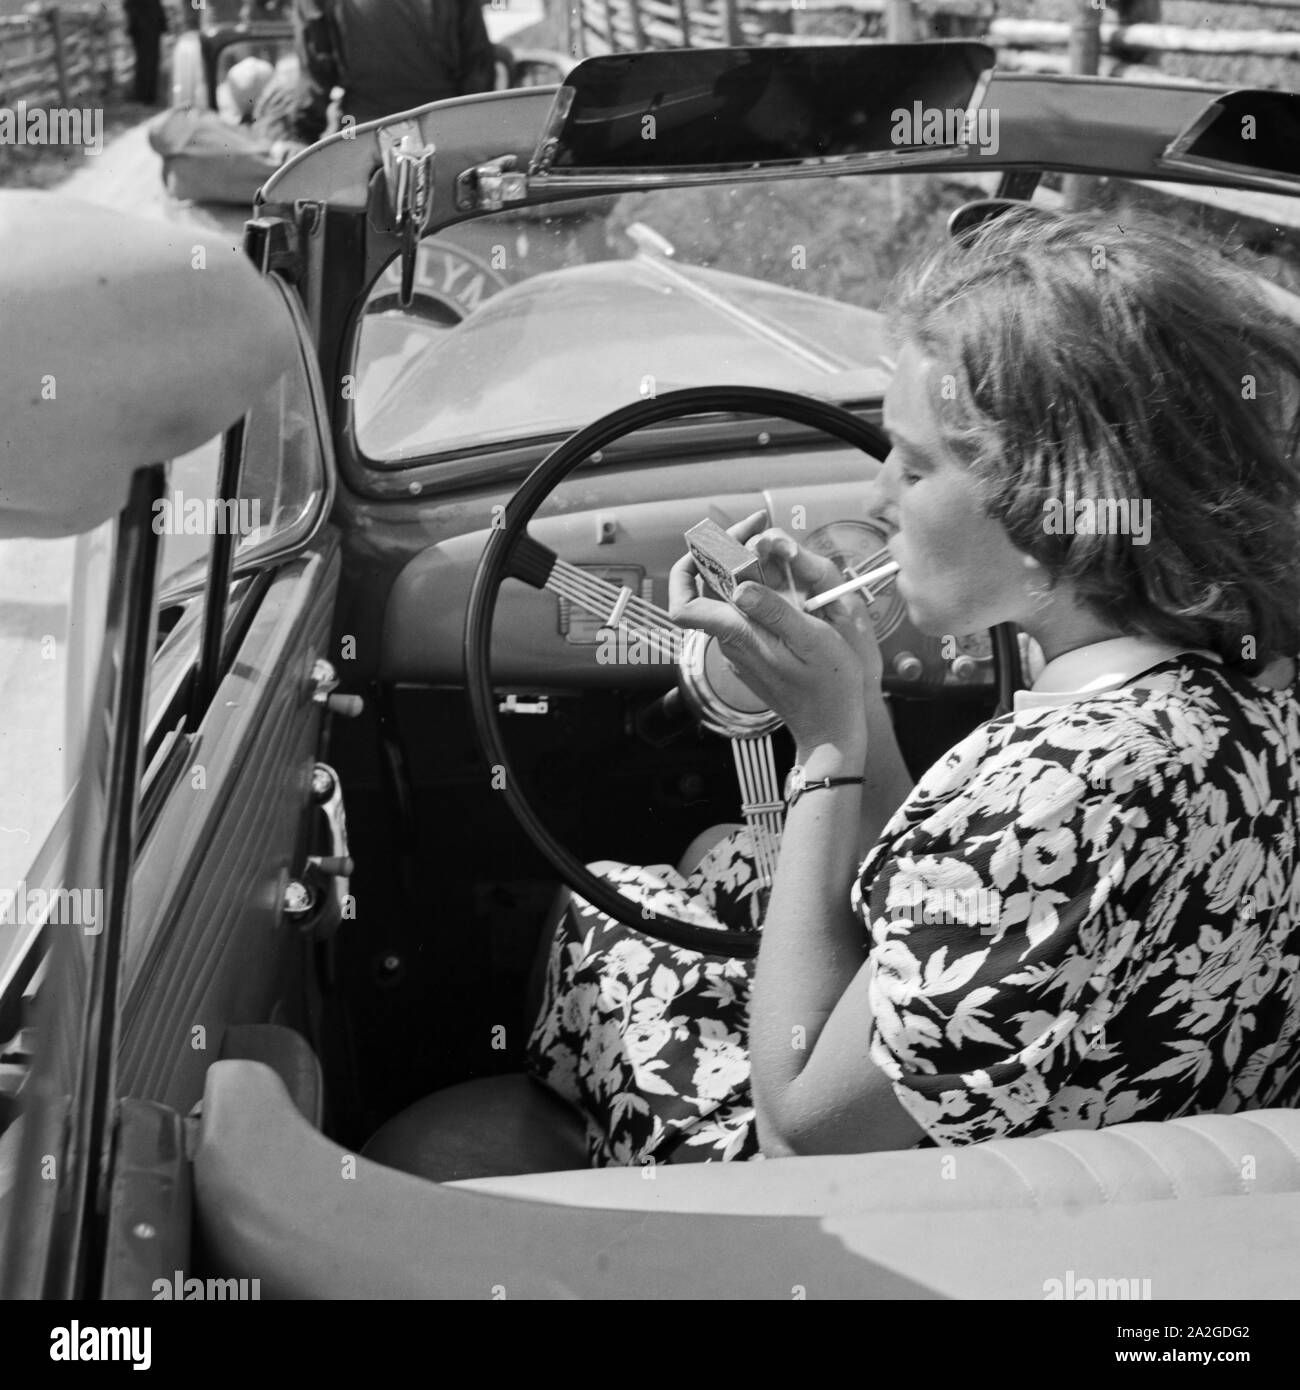 Eine junge Frau raucht am Steuer eines Opel Olympia, Deuitschland 1930er Jahre.  A ypung woman smoking in her Opel model Olympia, Germany 1930s. Stock Photo